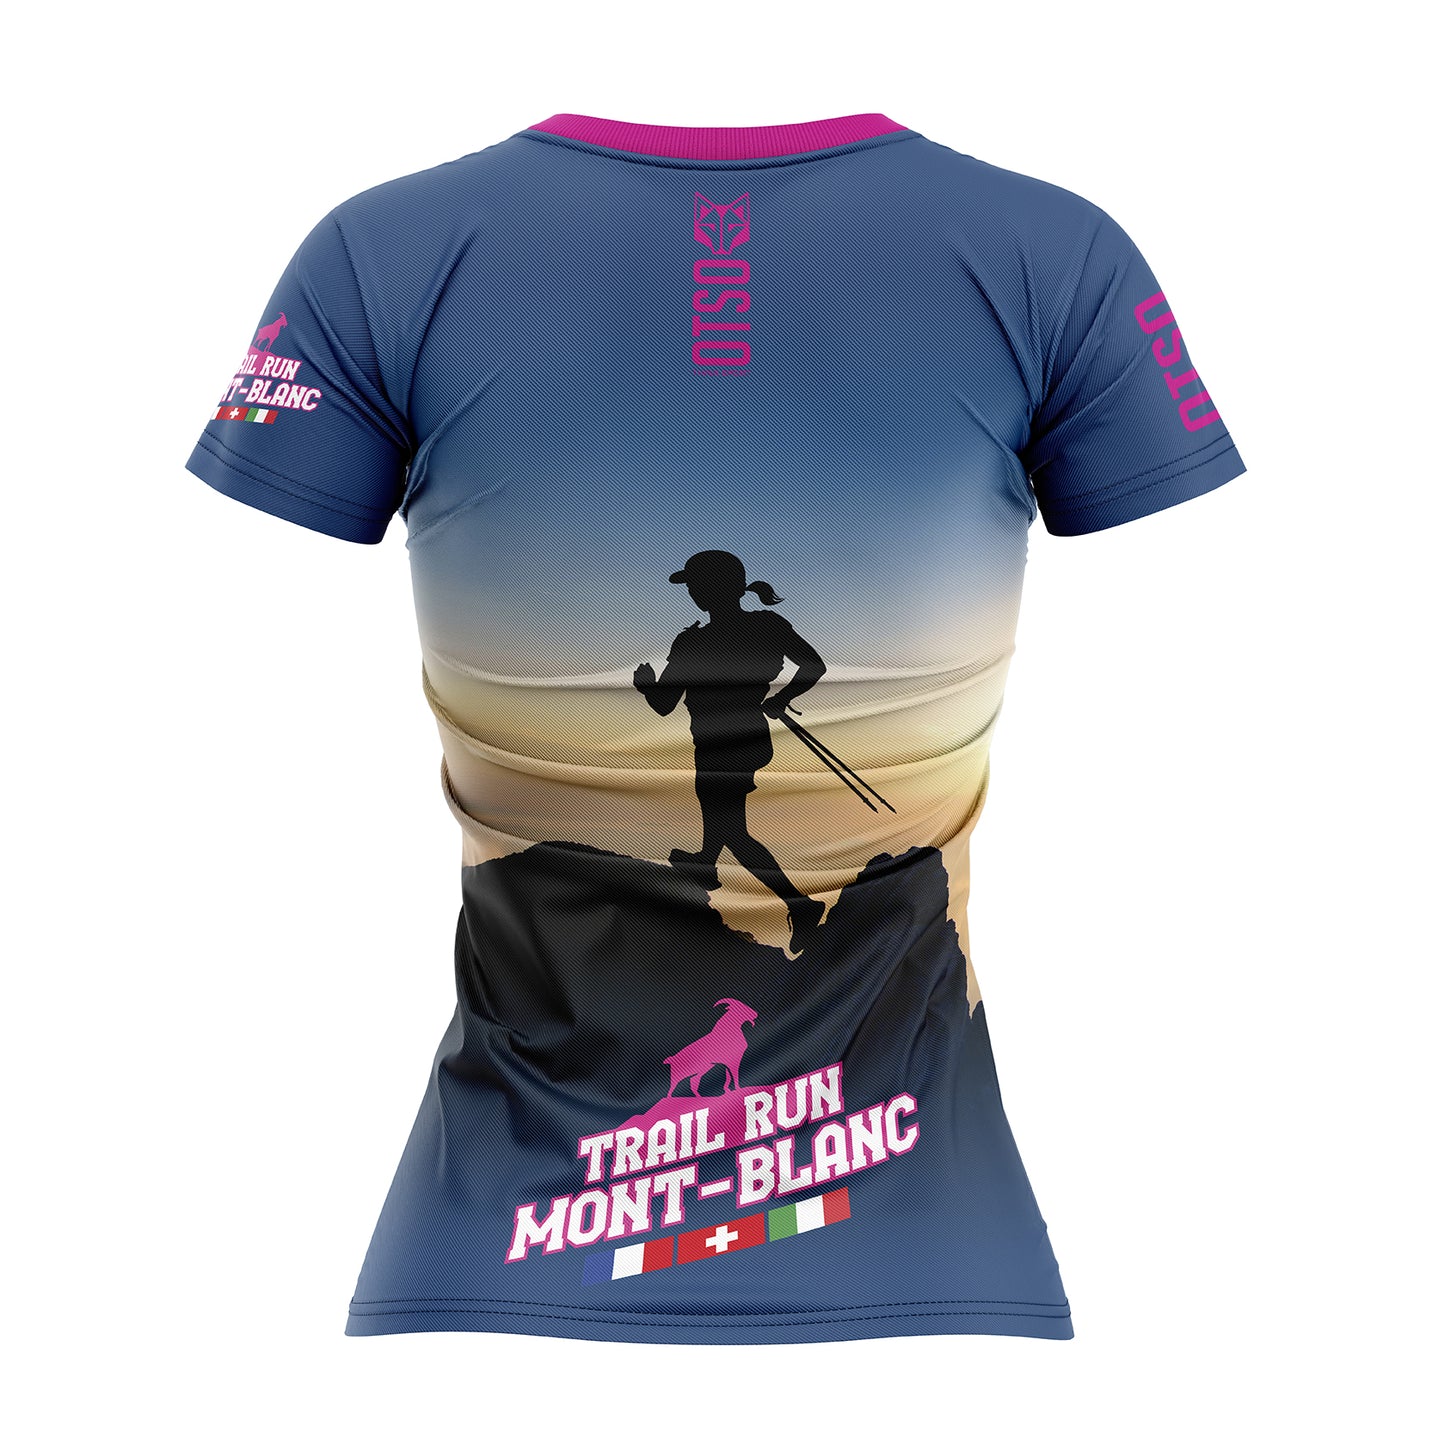 Samarreta màniga curta dona - Trail Run Montblanc Pink (Outlet)